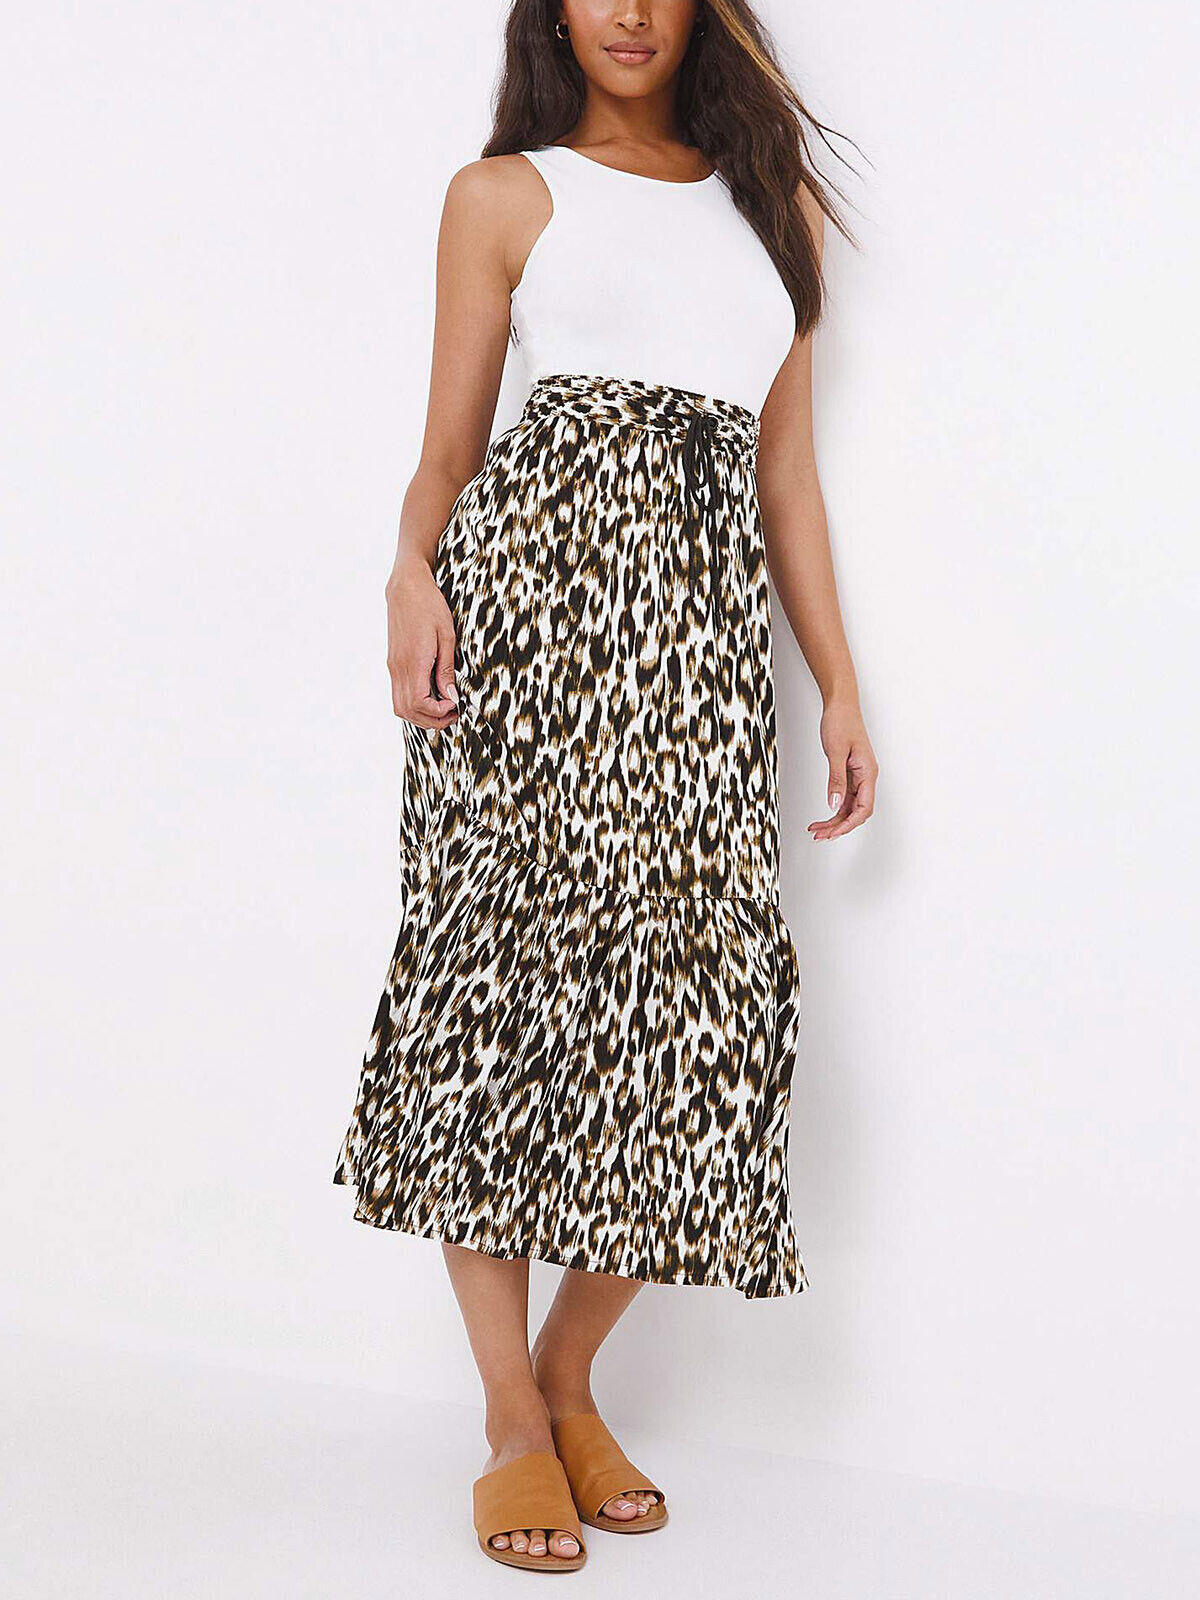 JD Williams Multi Tie Waist Animal Print Skirt Sizes 14 18 20 22 24 26 28 30 32